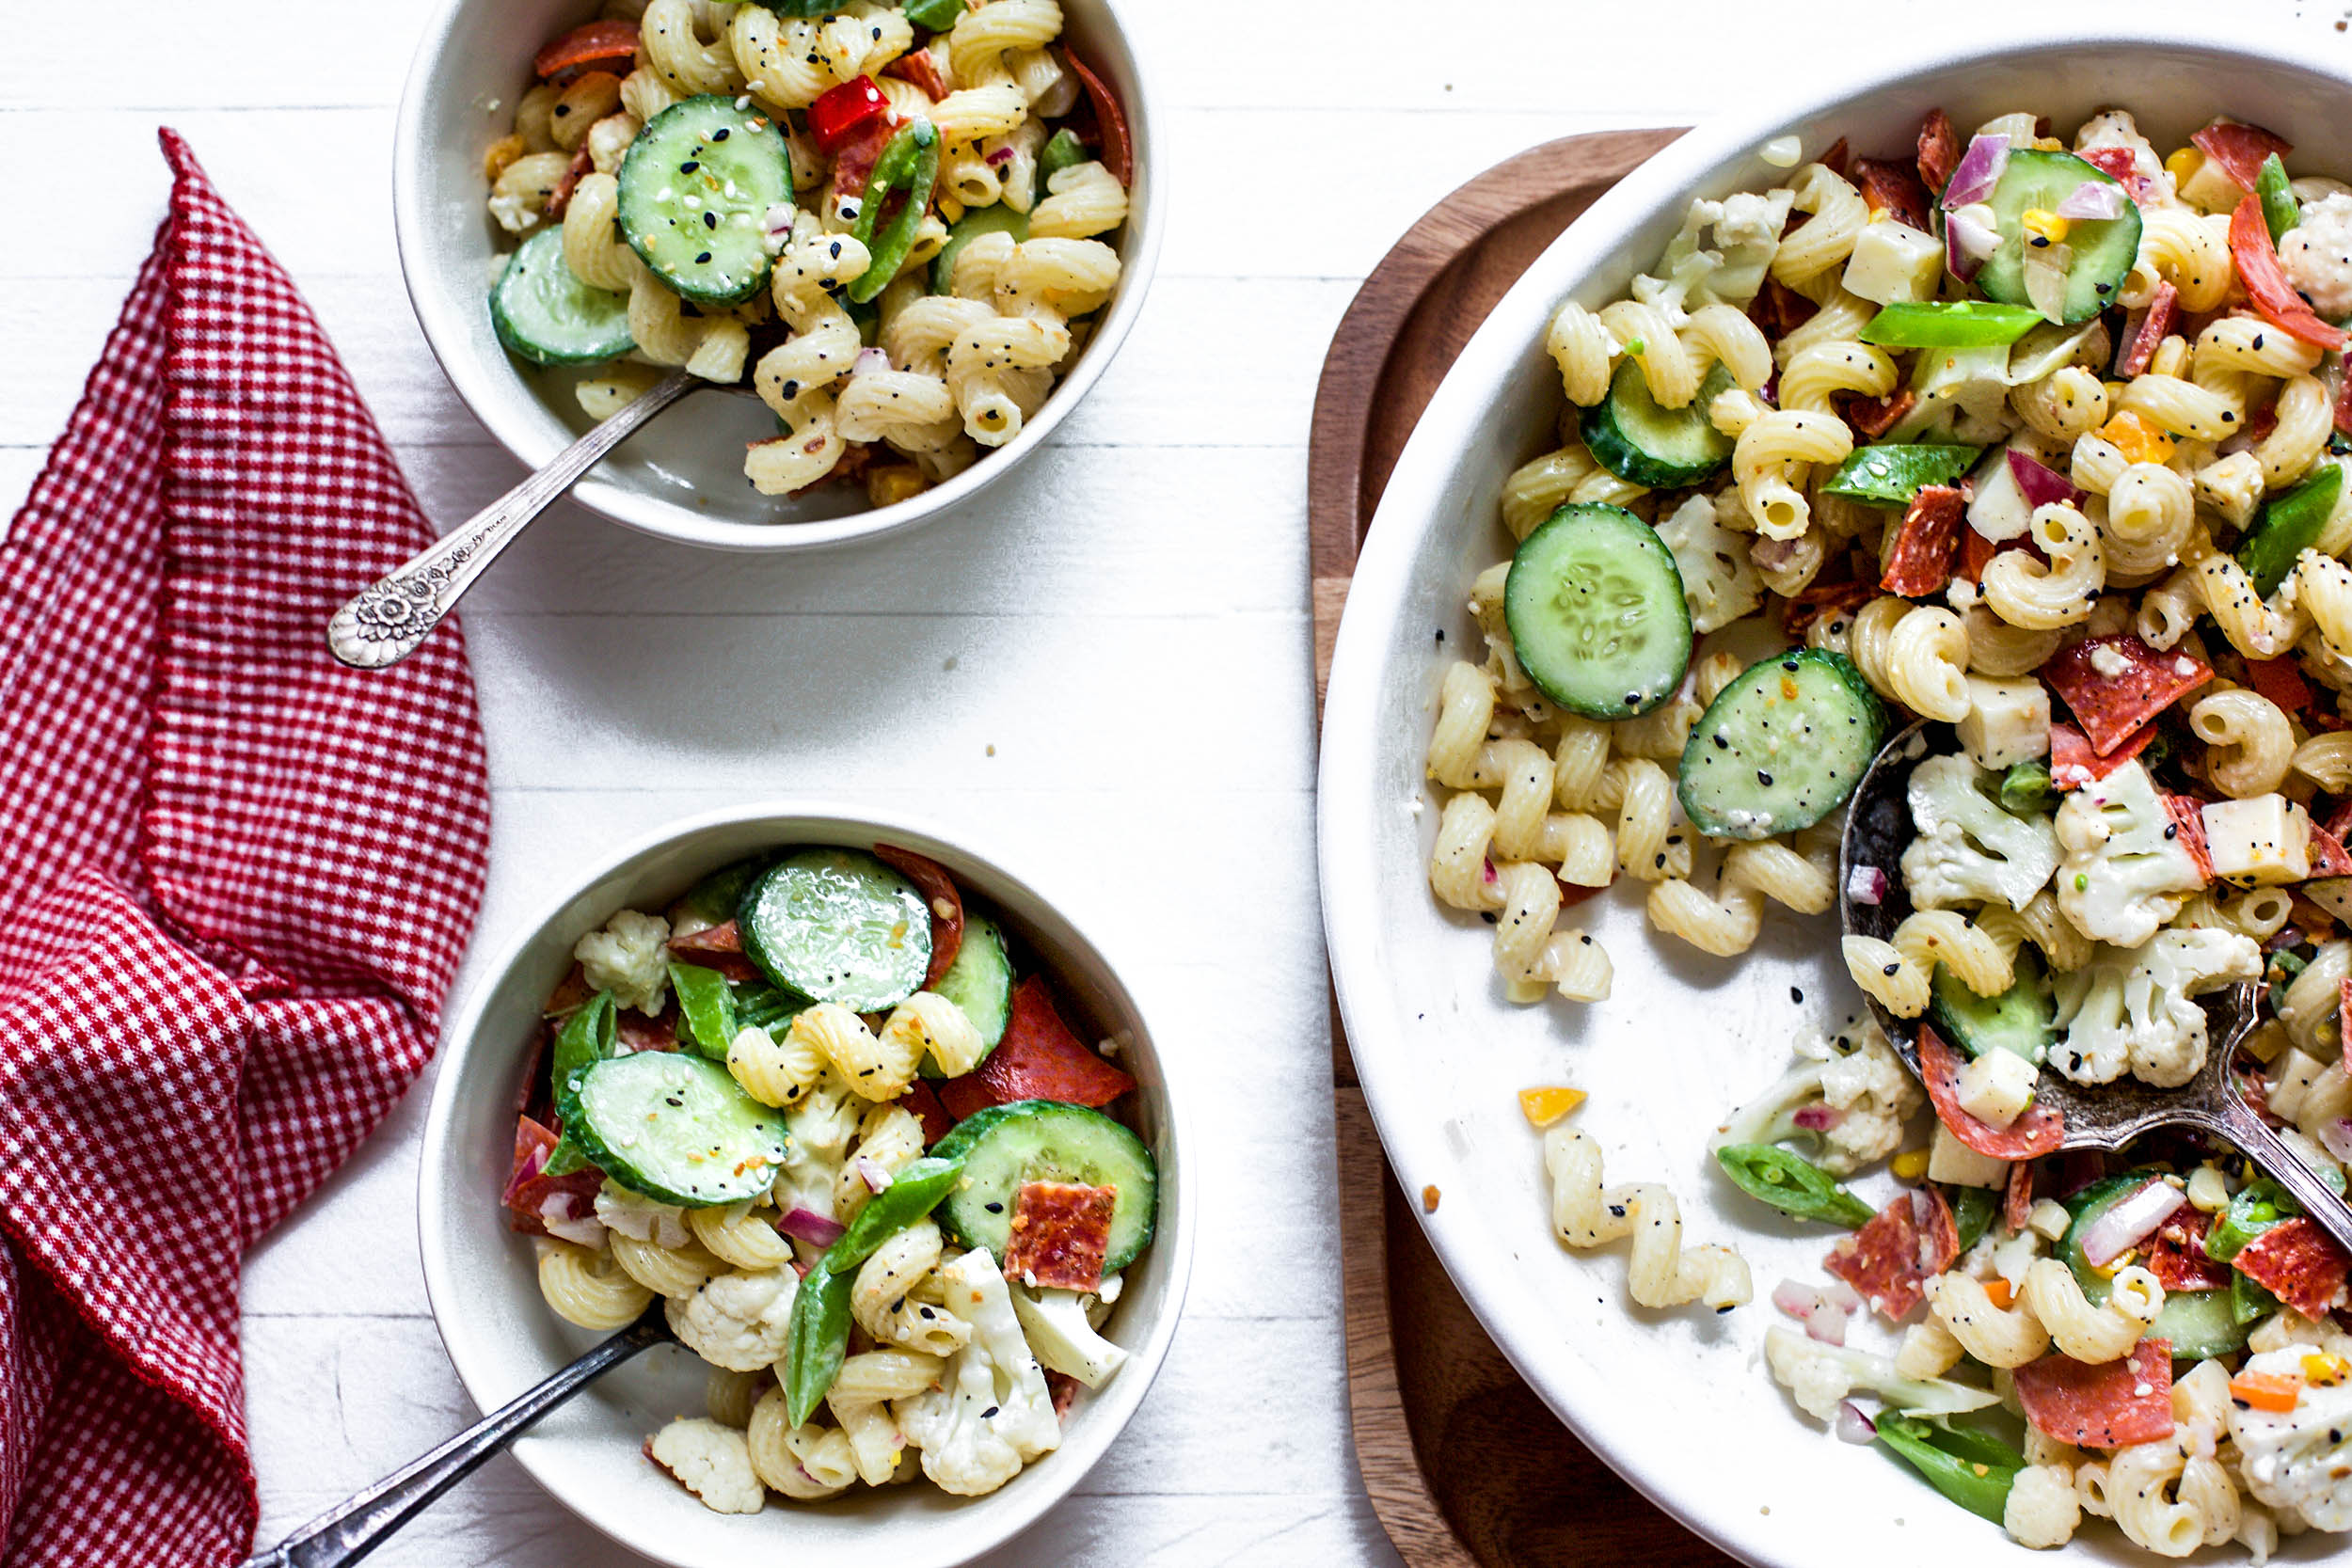 Bentgo on Instagram: We heard pasta salad is the IT lunch item